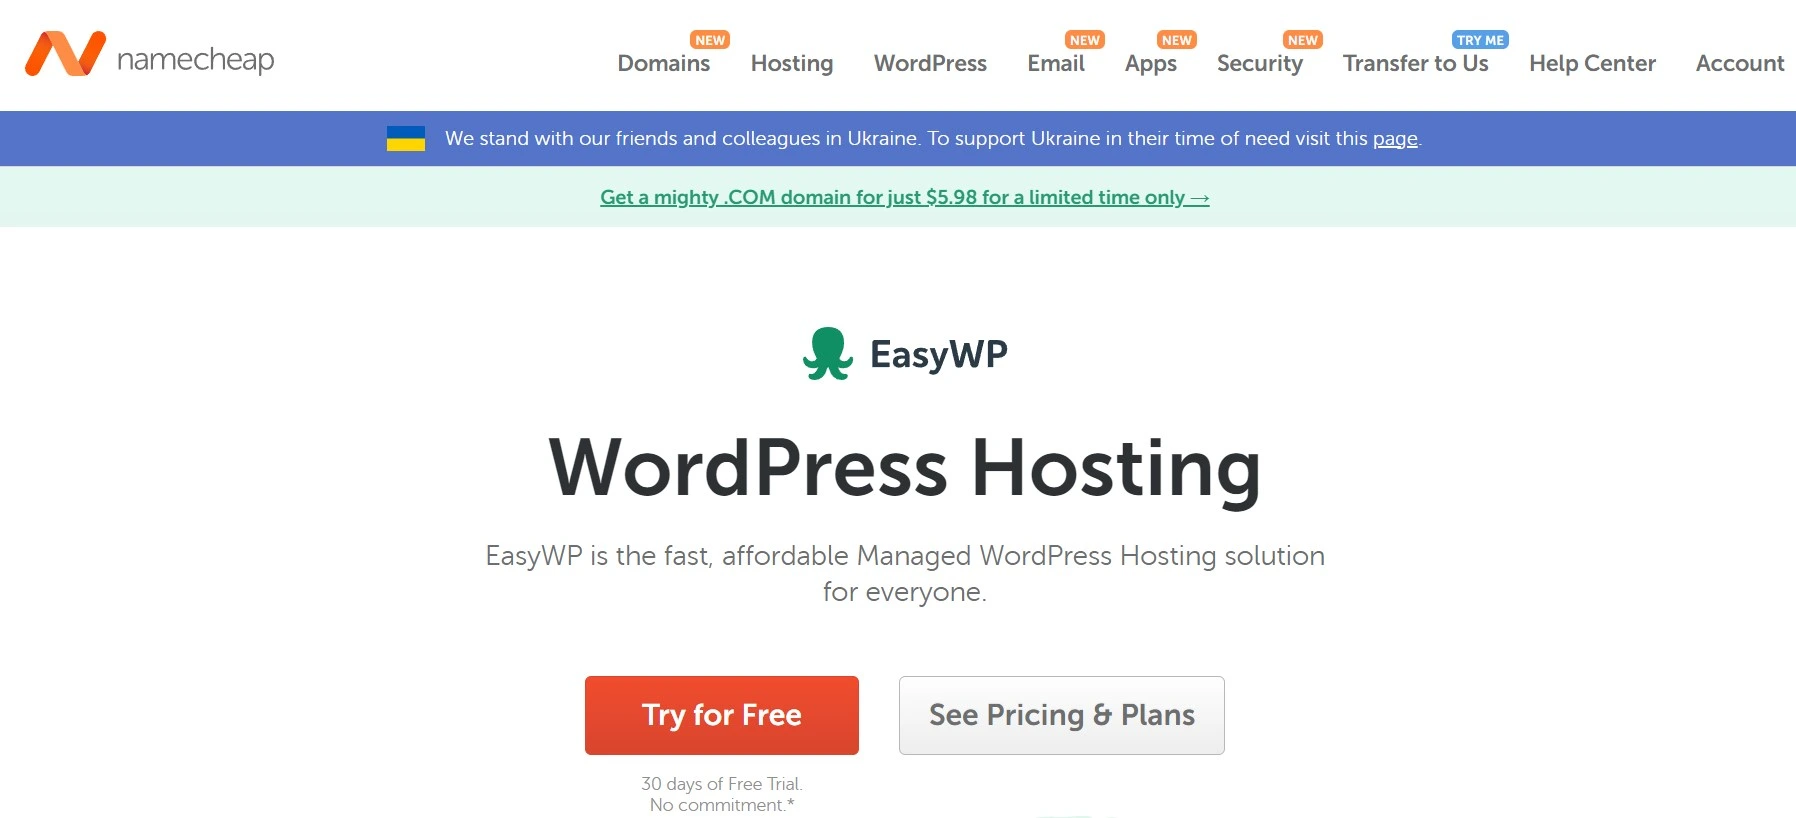 Namecheap Affordable Wordpress Hosting Solution